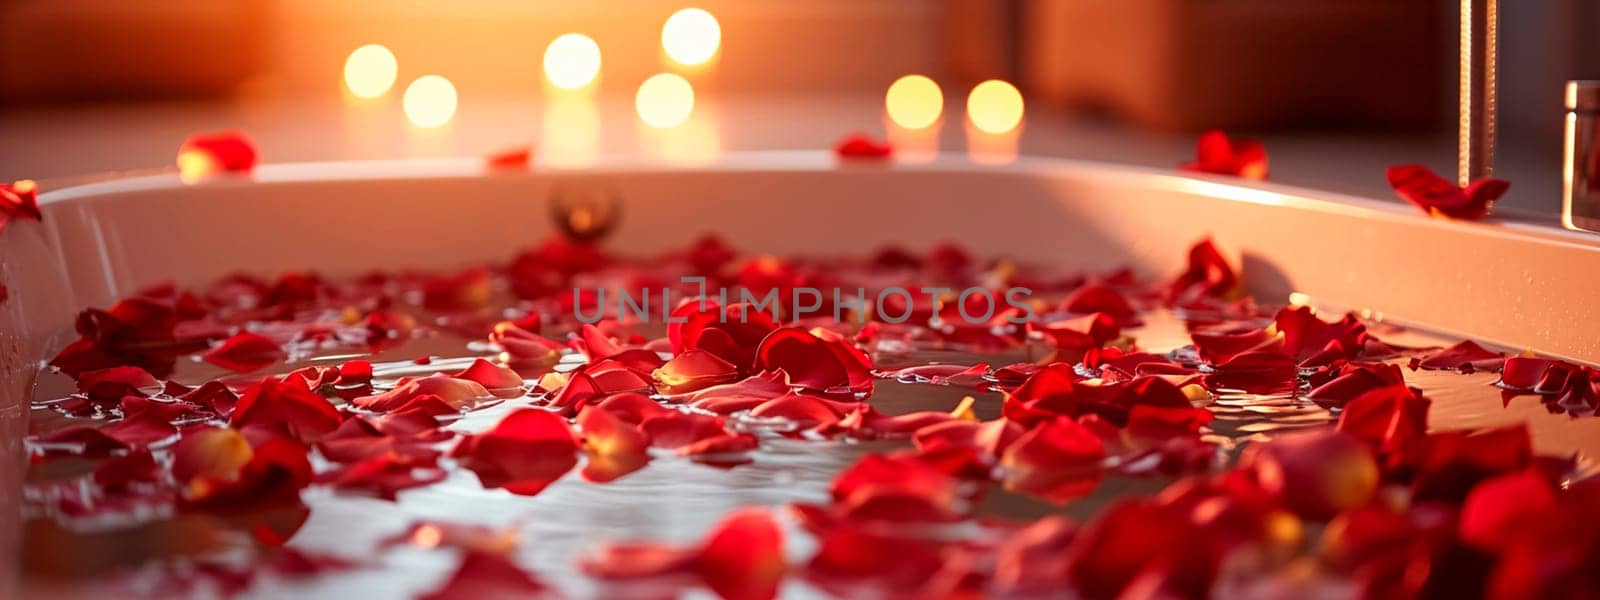 rose petals in the bath. Selective focus. by yanadjana